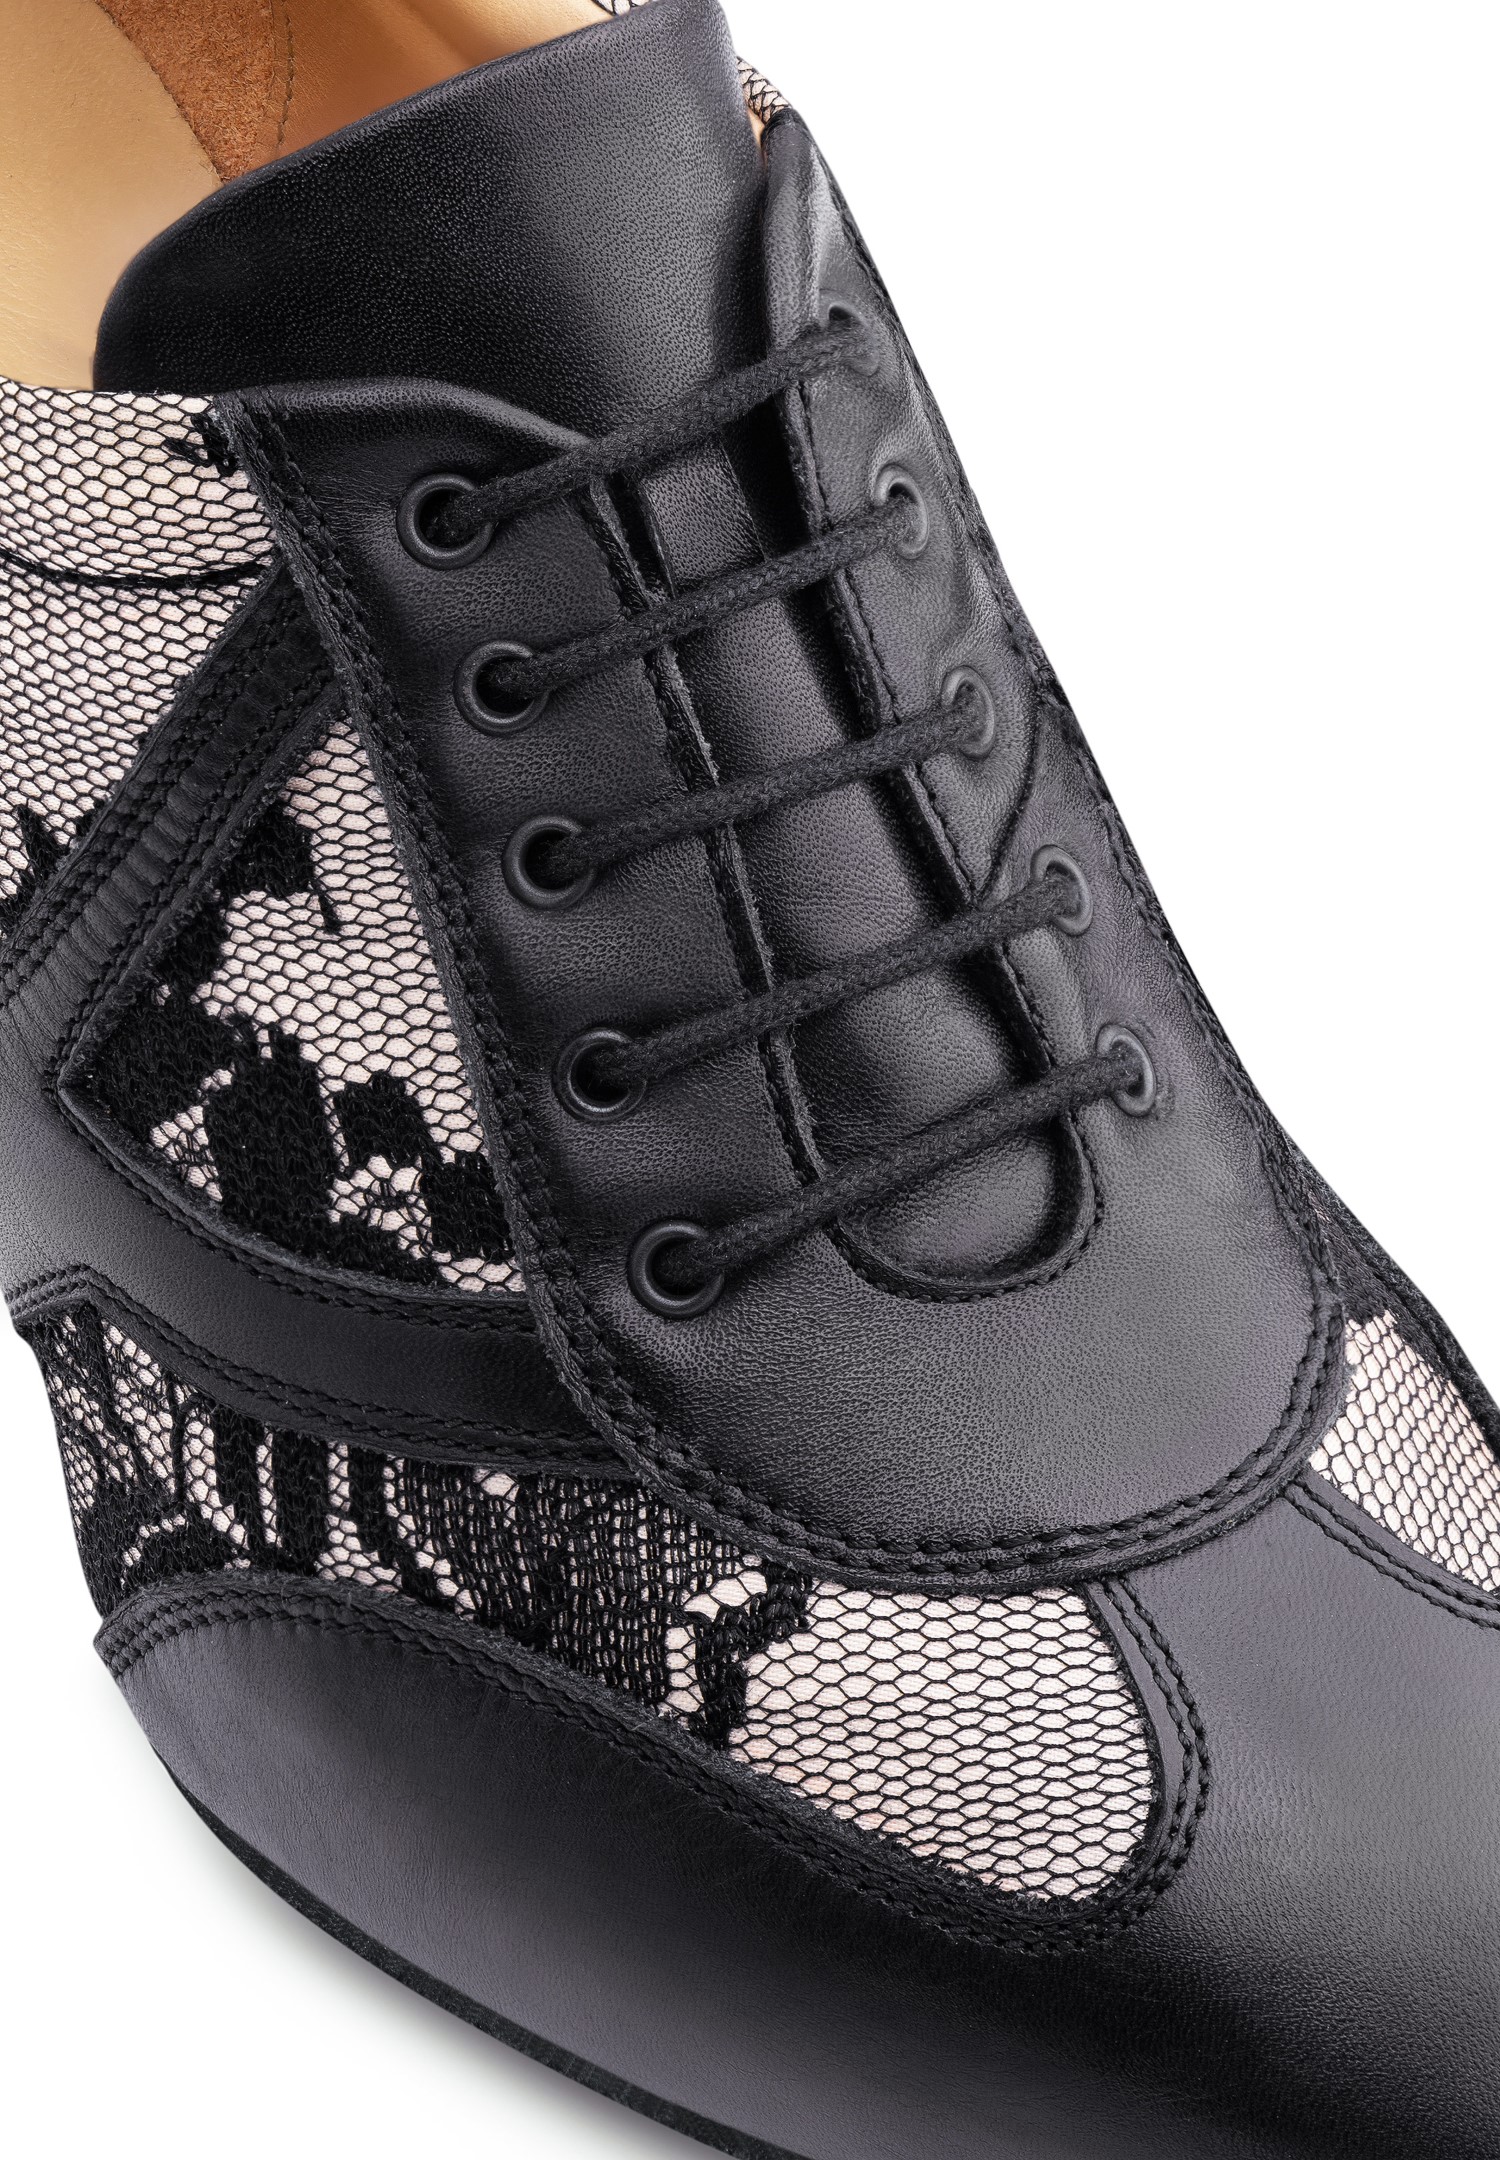 tights <3  Fashion, Louis vuitton, Dance shoes